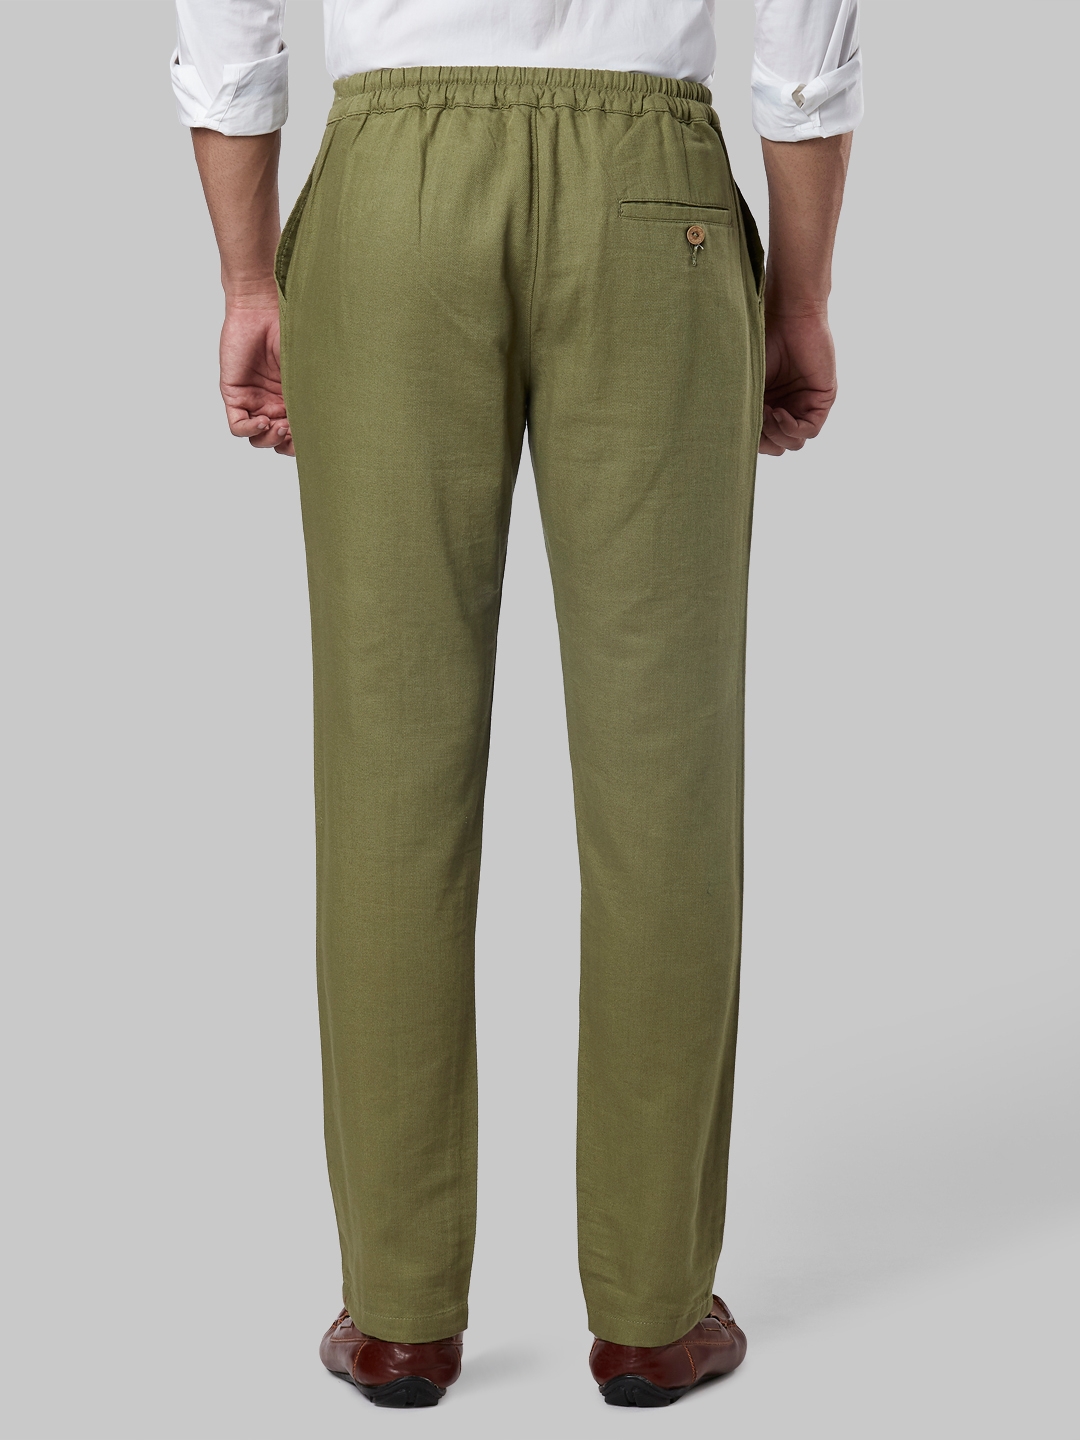 Solid Formal Men's Trouser ( olive green ), Slim Fit at Rs 299 in Bhilwara